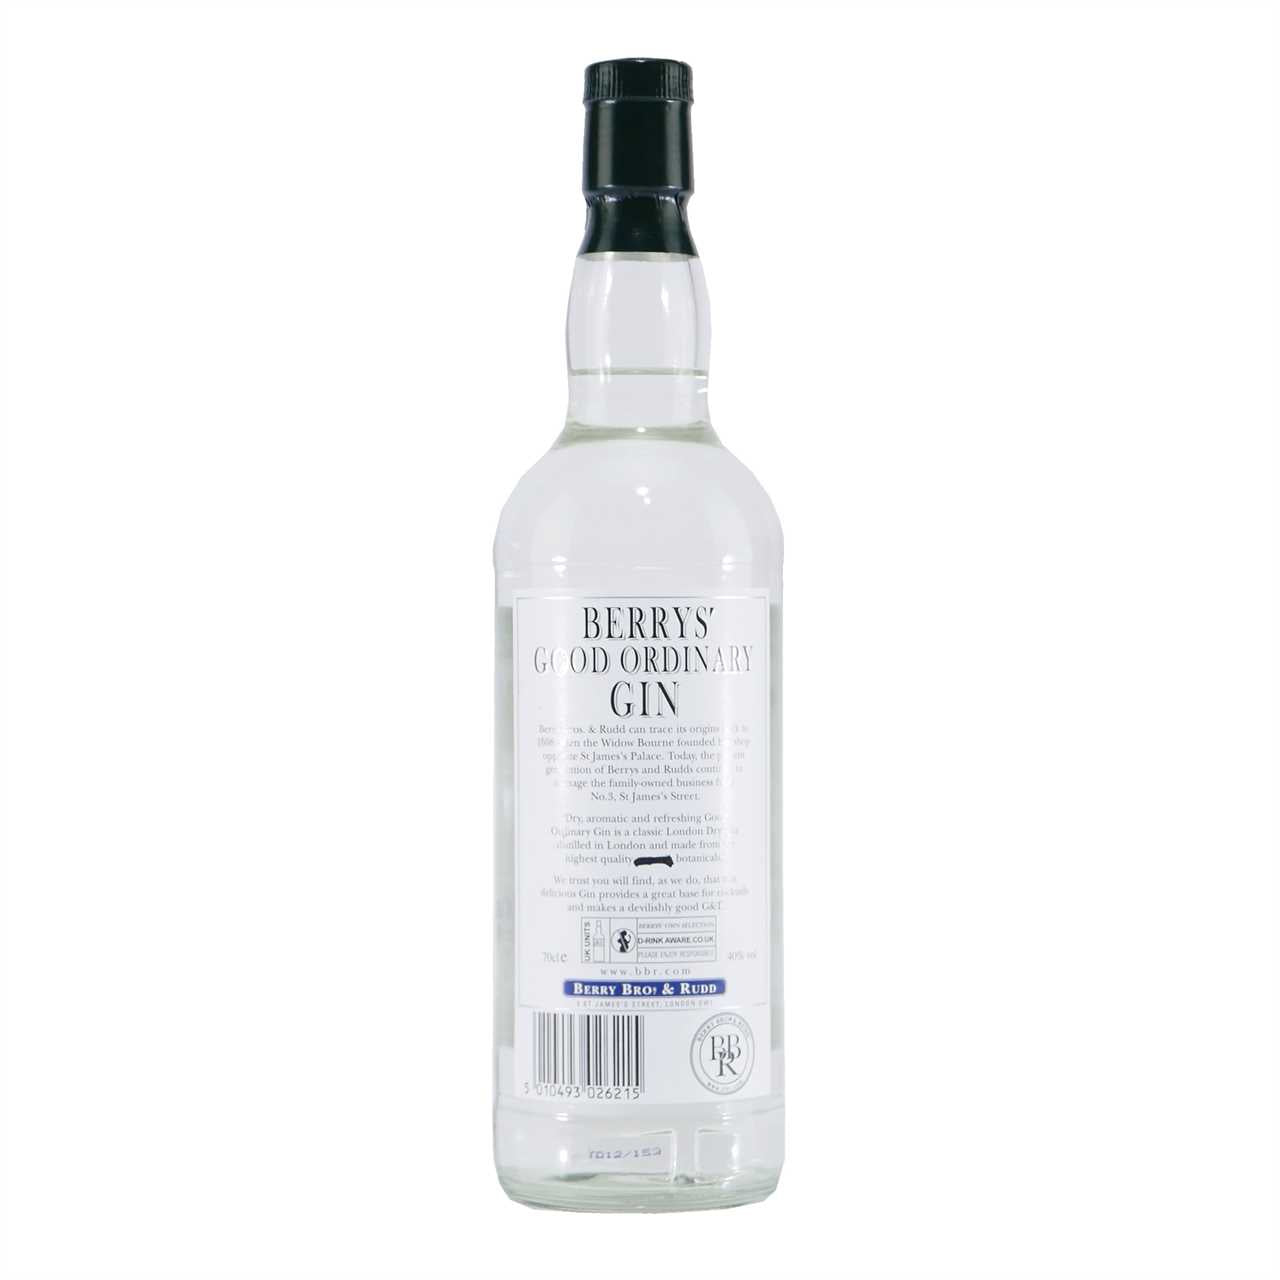 Berry's Good Ordinary London Dry Gin